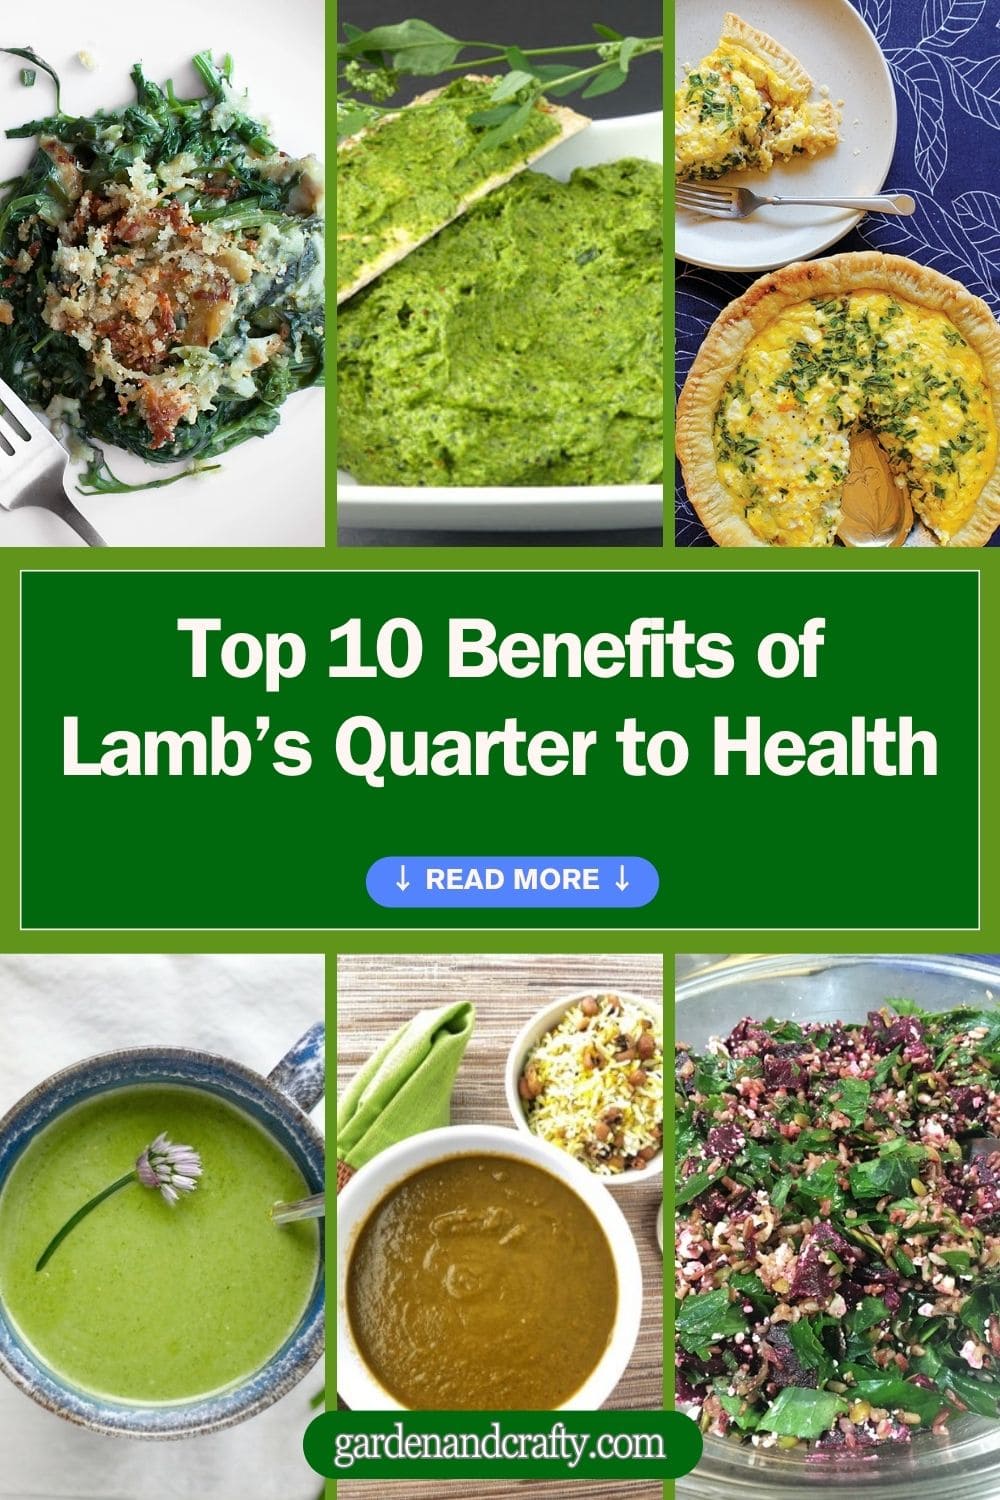 Top 10 Benefits of Lamb’s Quarter to Health